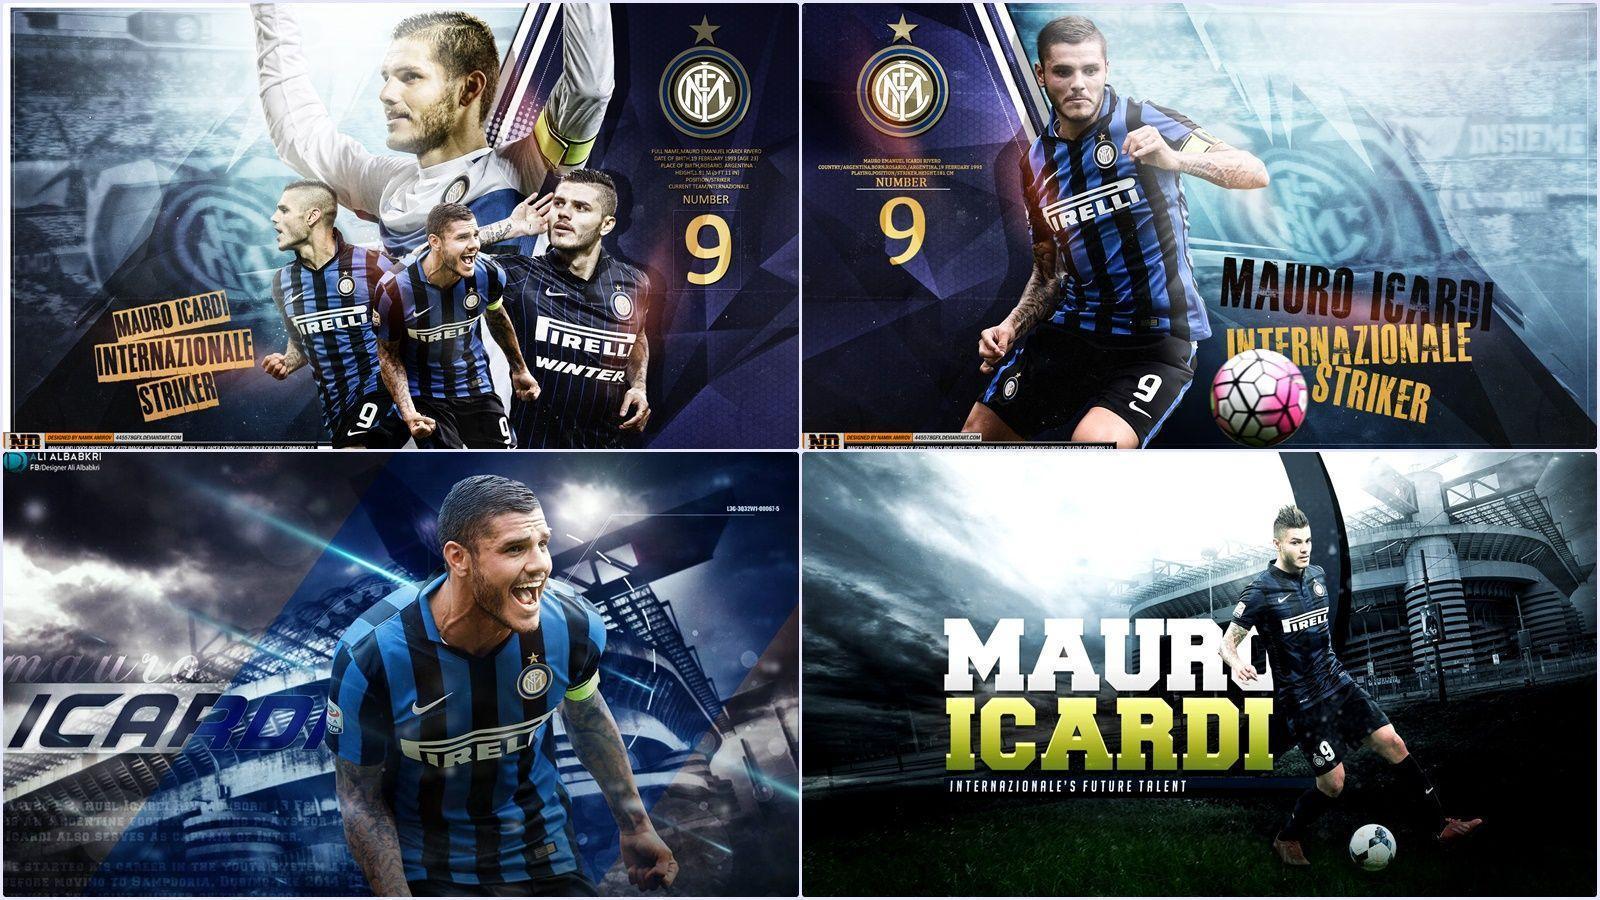 Amazing Mauro Icardi Wallpaper Internazionale Full HD 4K